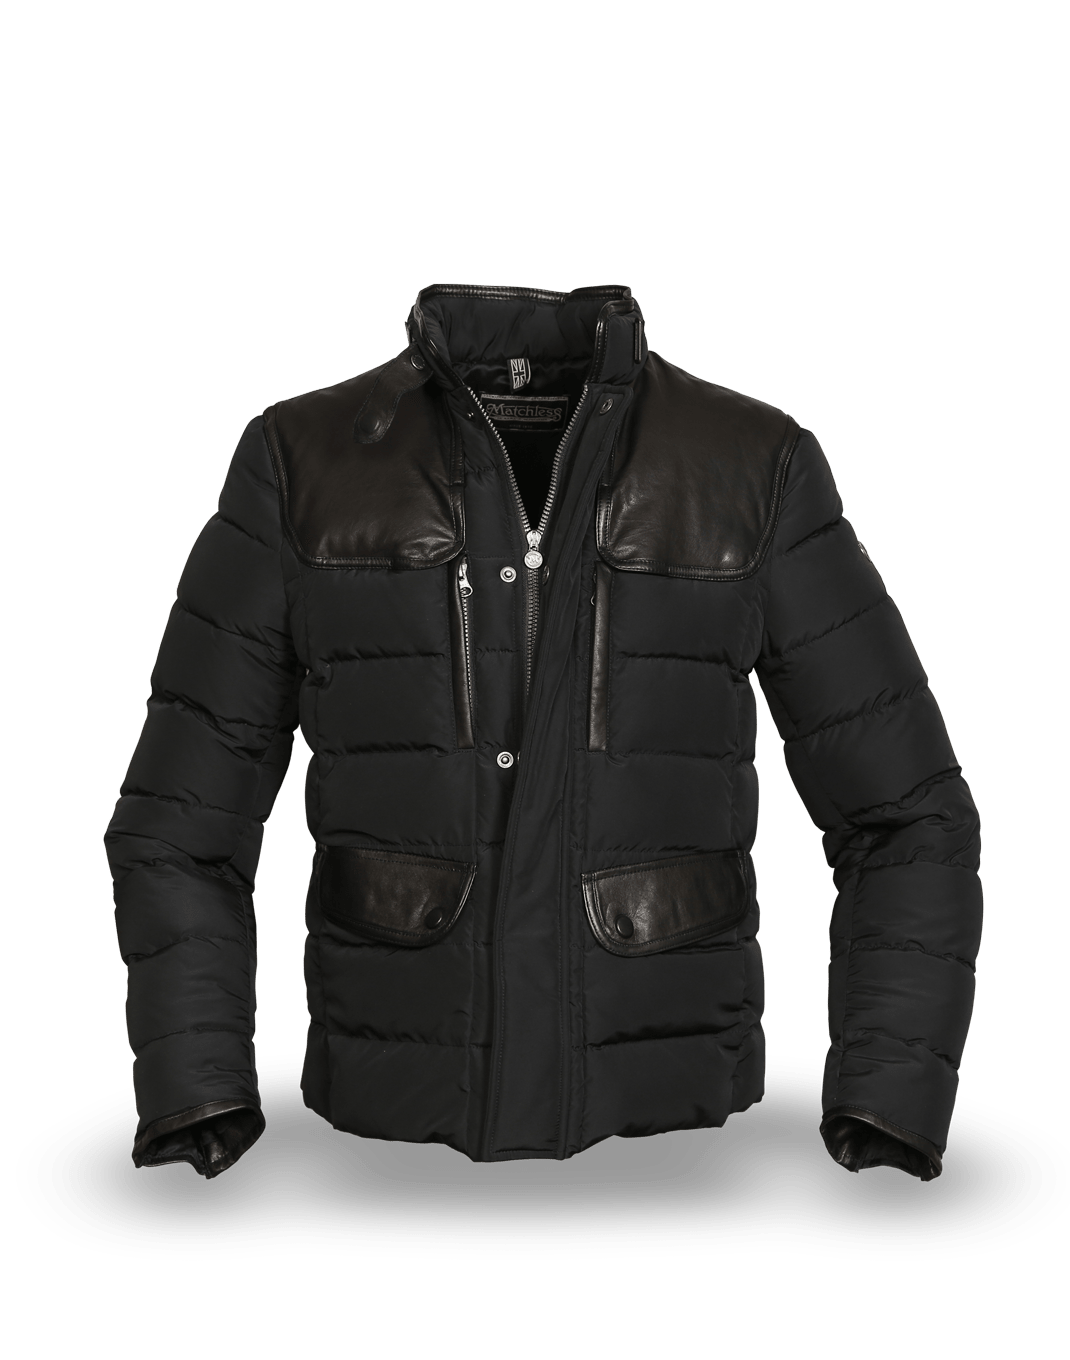 Matchless Hailwood Down Jacket Man, black | Gotlands Fashion